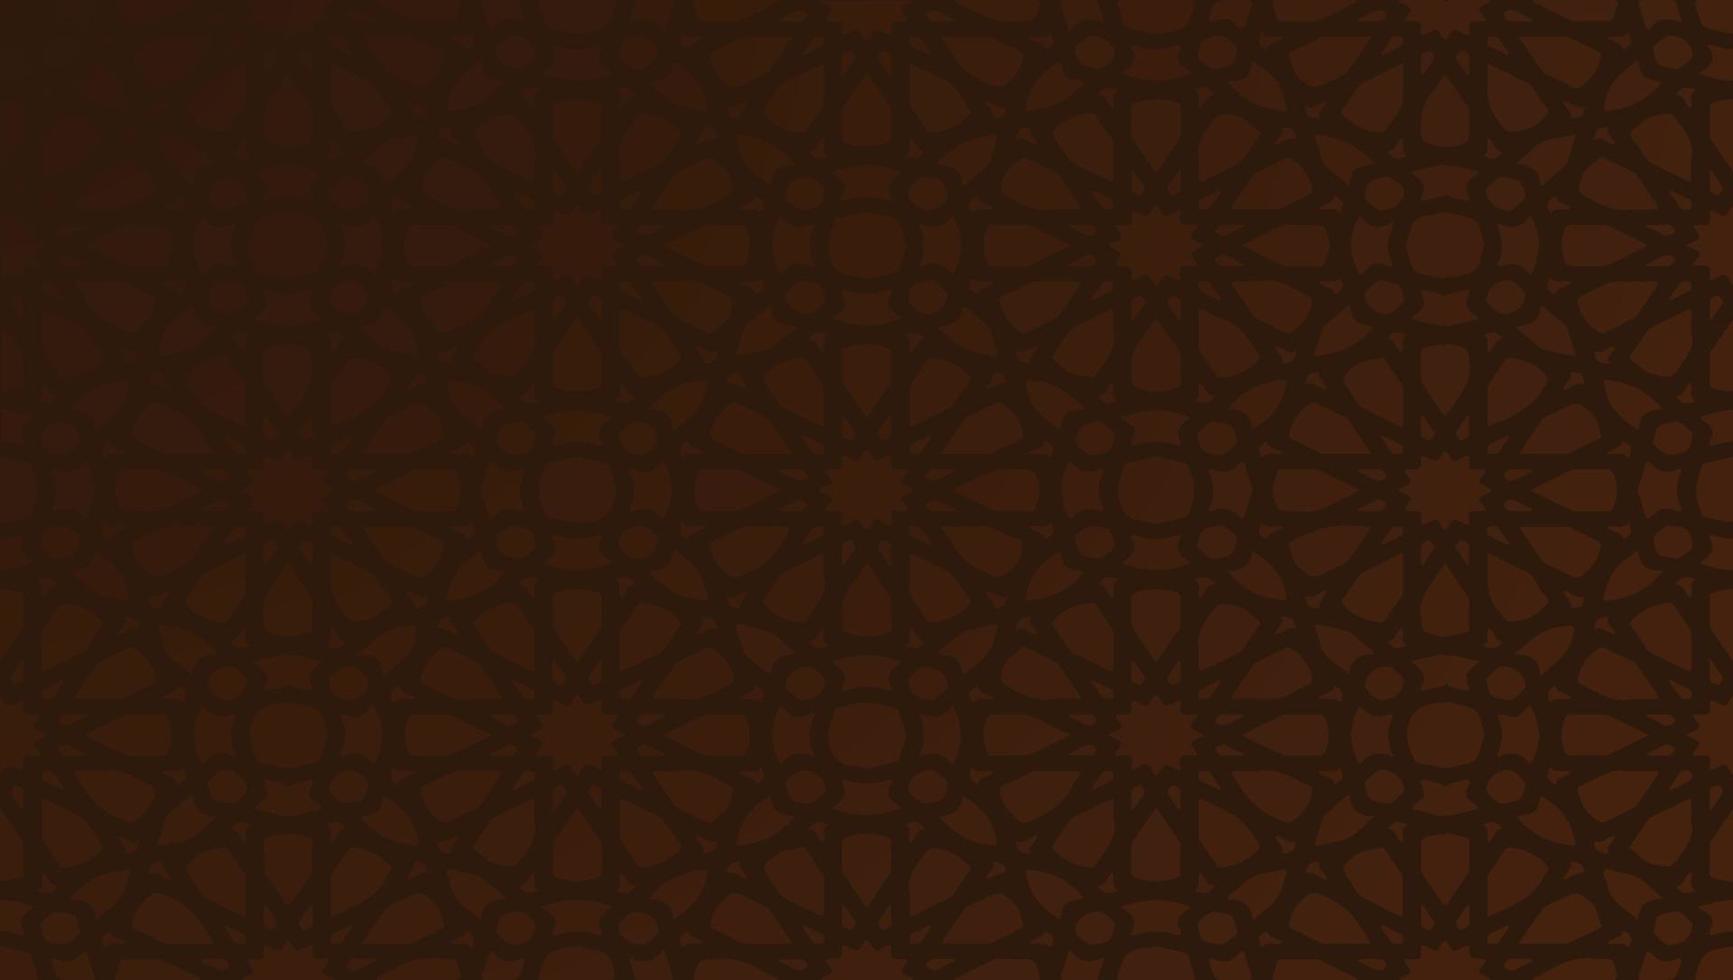 Arabic Pattern Background vector